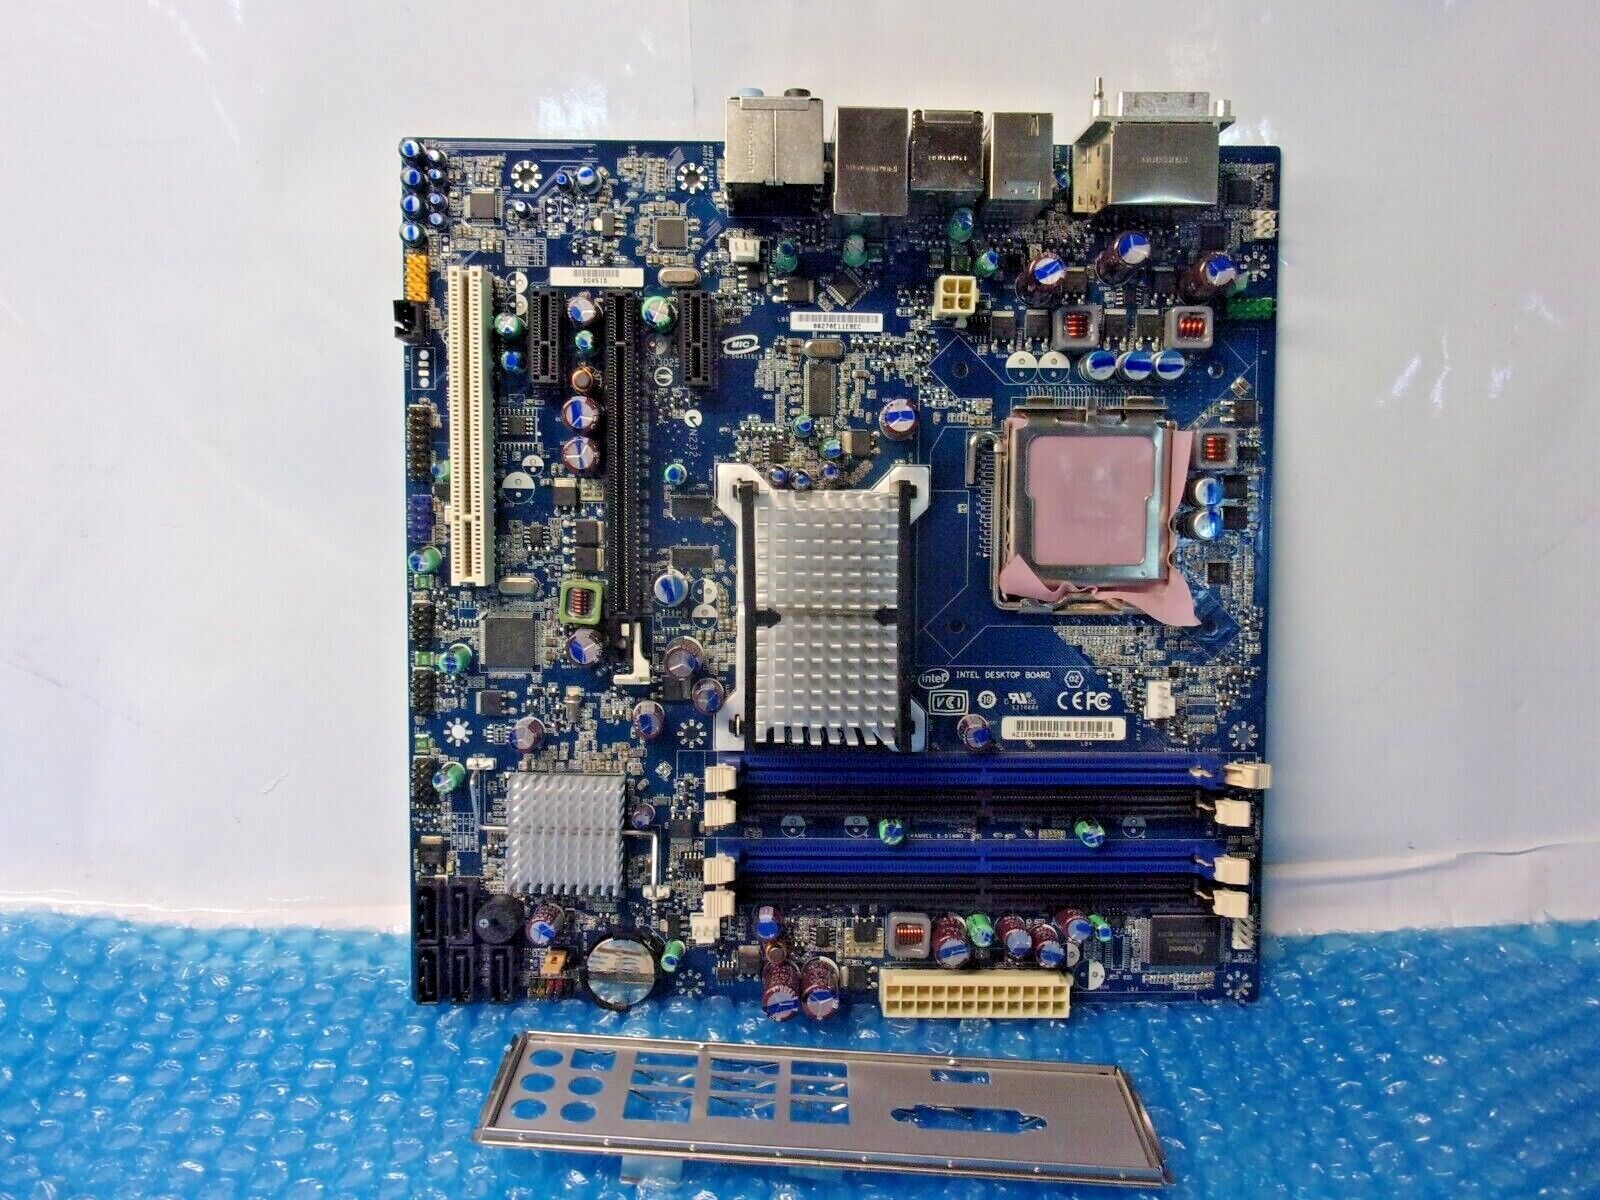 Intel DG45ID Socket LGA775 DDR2 Micro ATX Motherboard With I/O Shield E22729-310